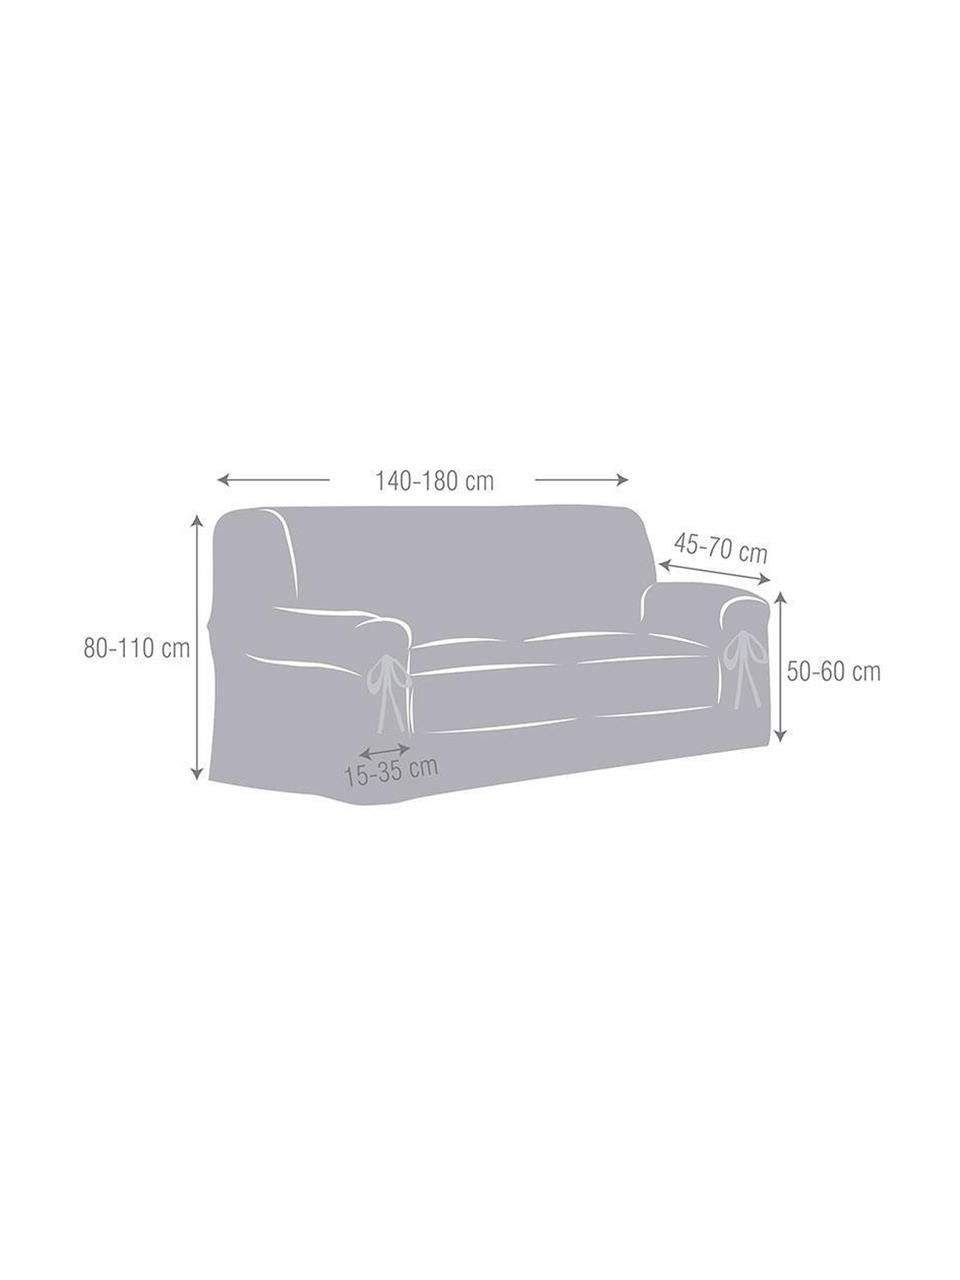 Funda de sofá Levante, 65% algodón, 35% poliéster, Crema, 2 plazas (160 x 110 cm)